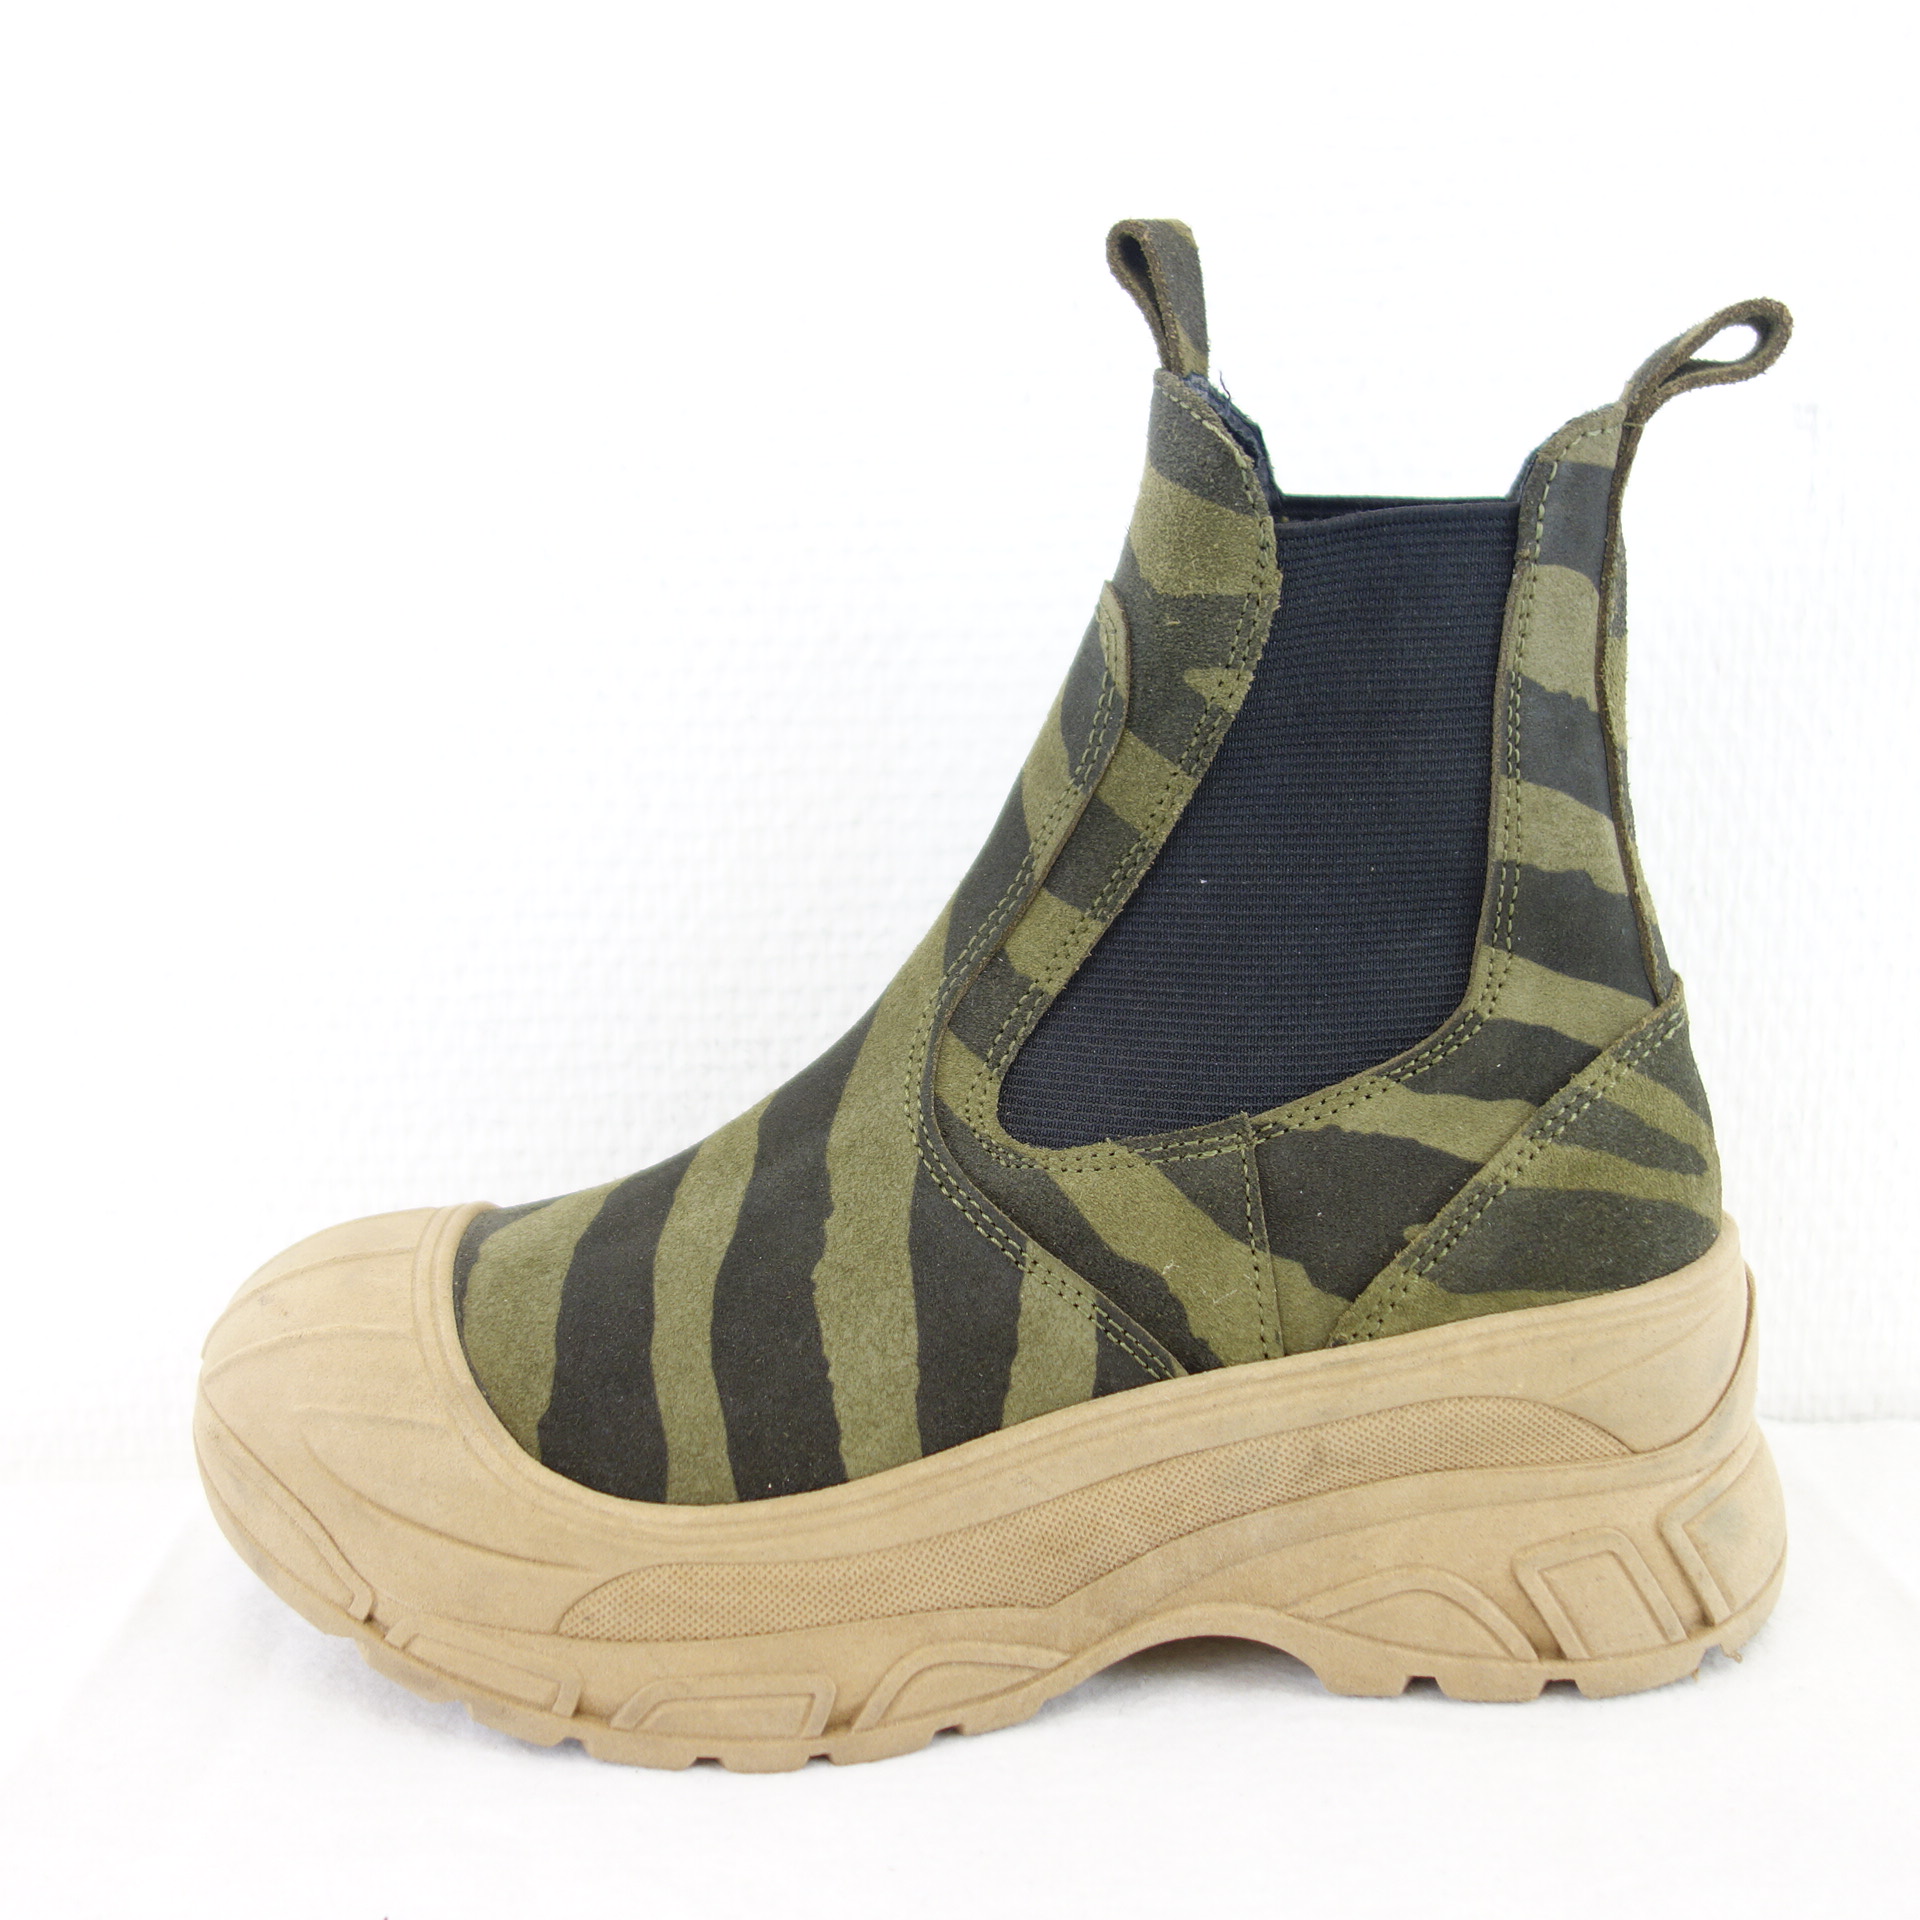 BUKELA Damen Schuhe Chelsea Boots Stiefeletten Stiefel Leder Grün Camouflage 37